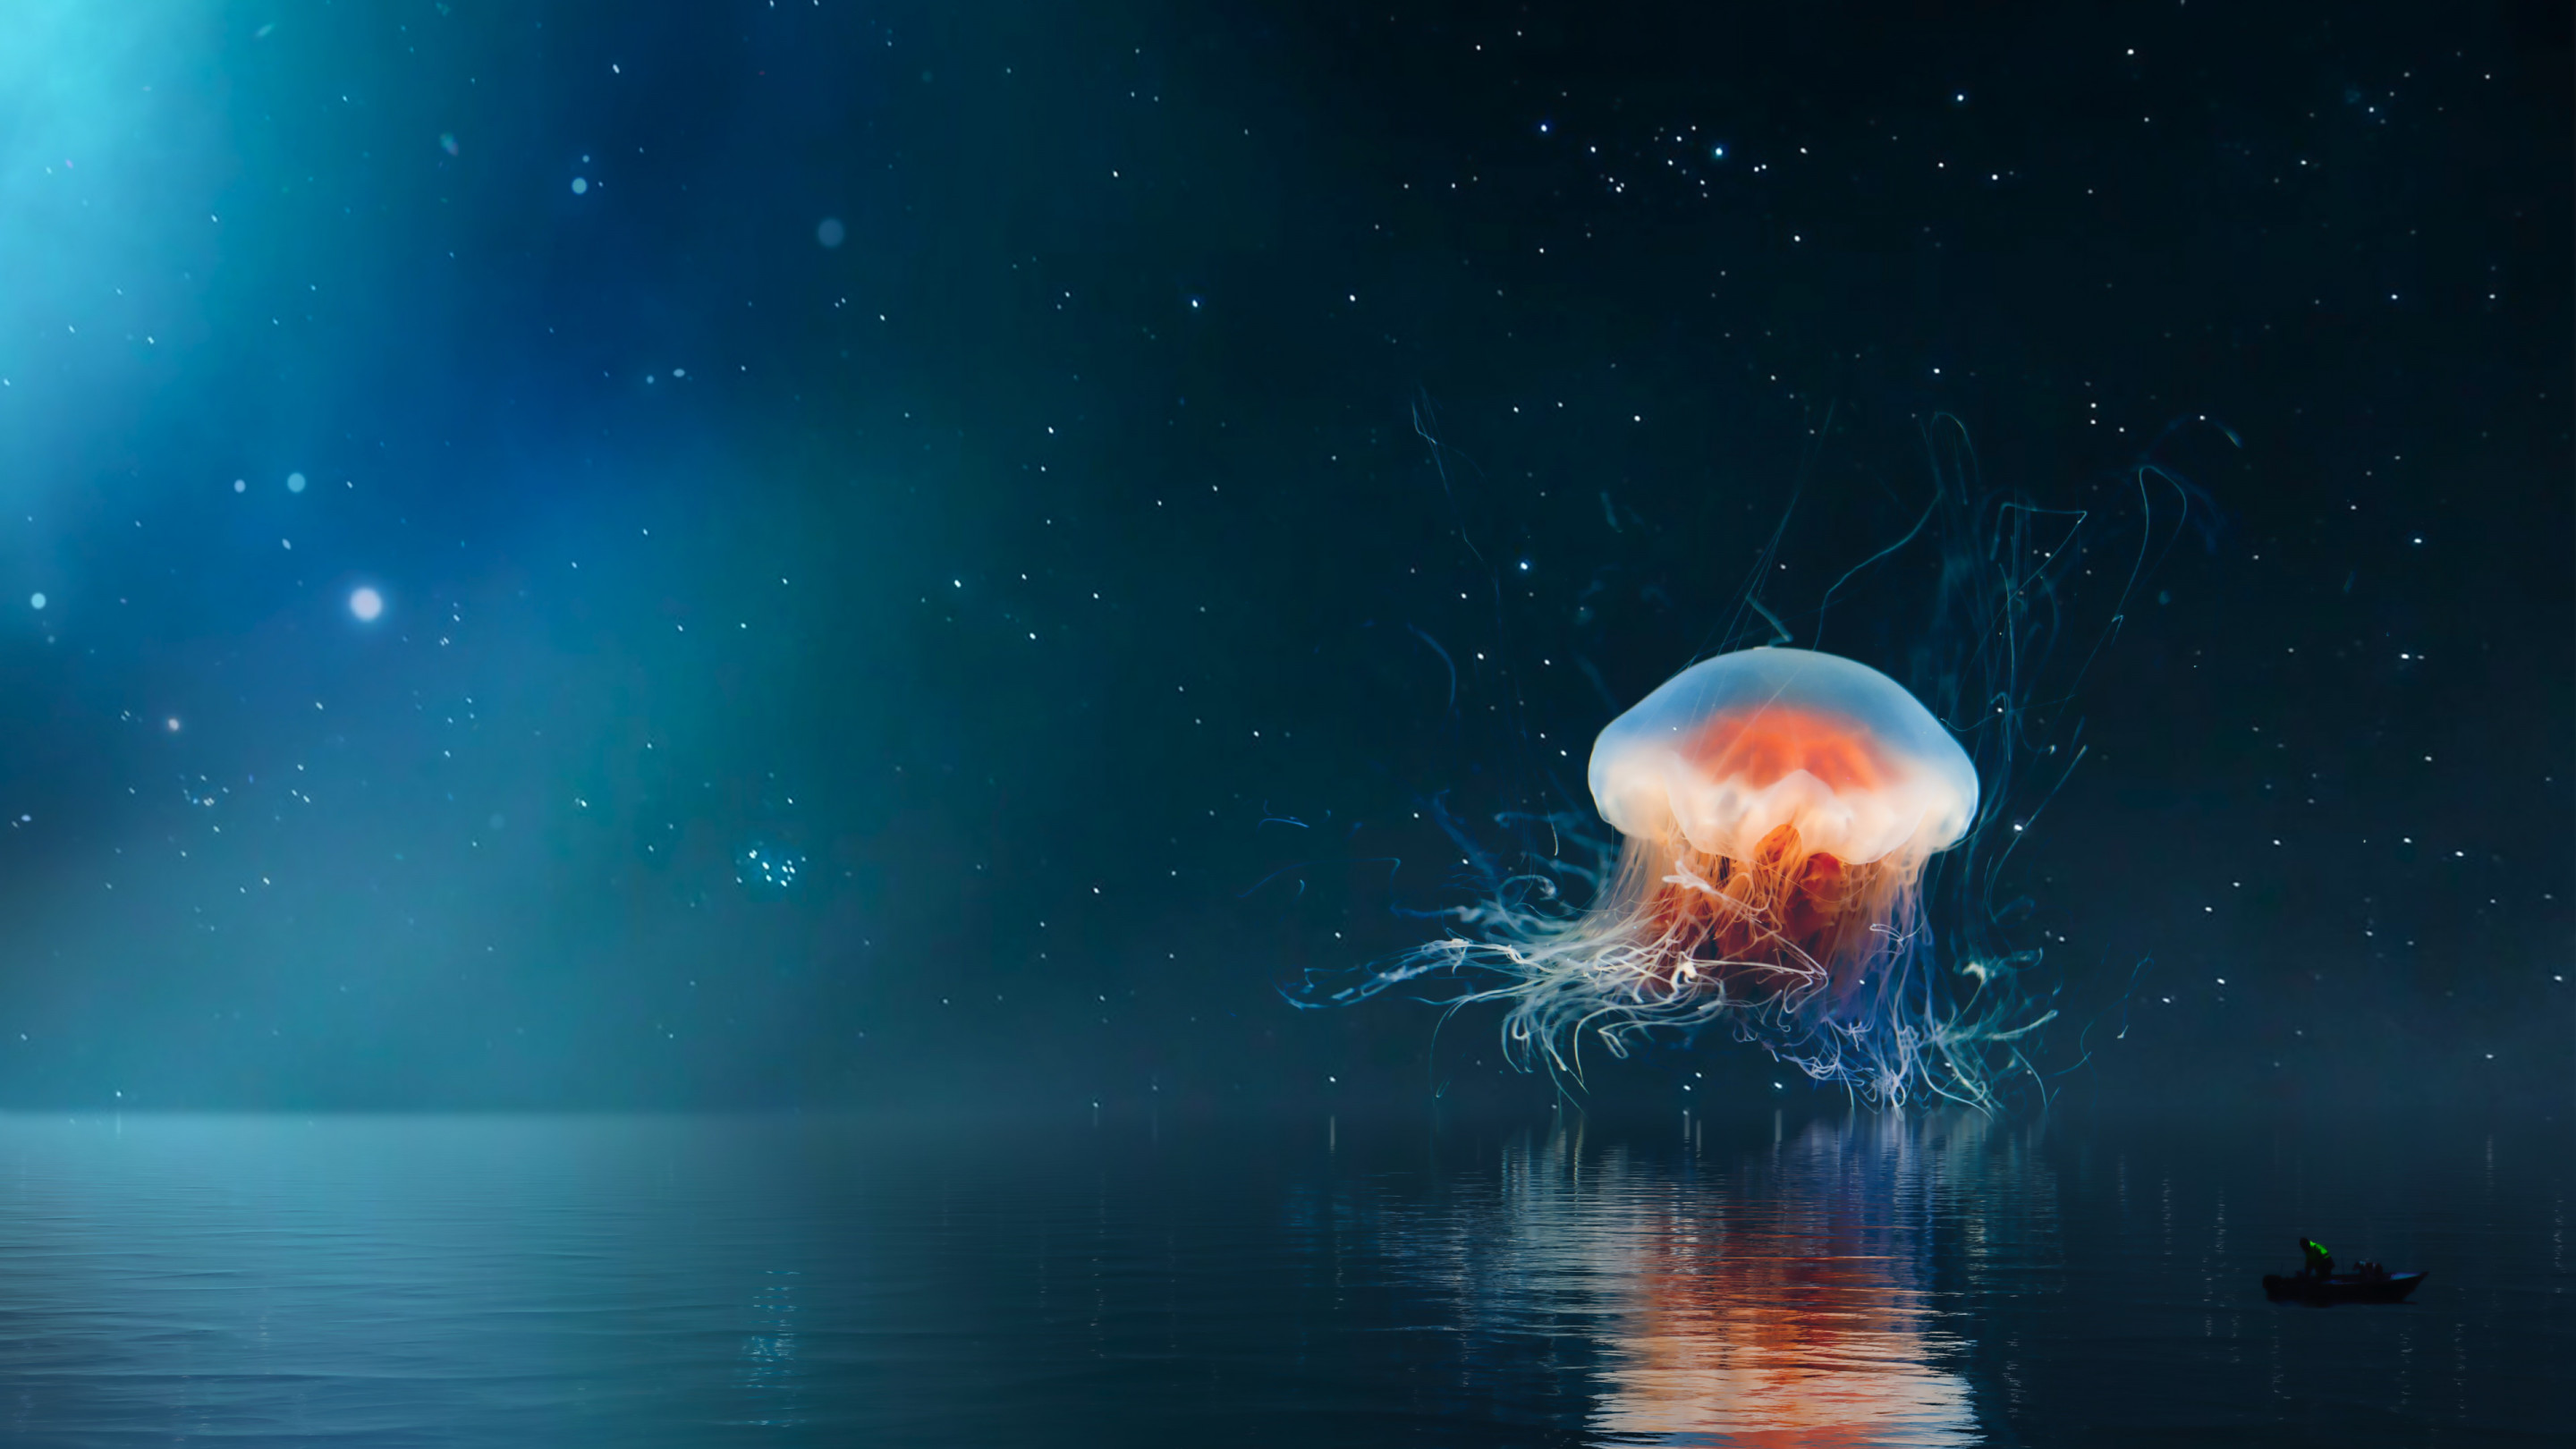 Jellyfish on the night sky wallpaper 2880x1620